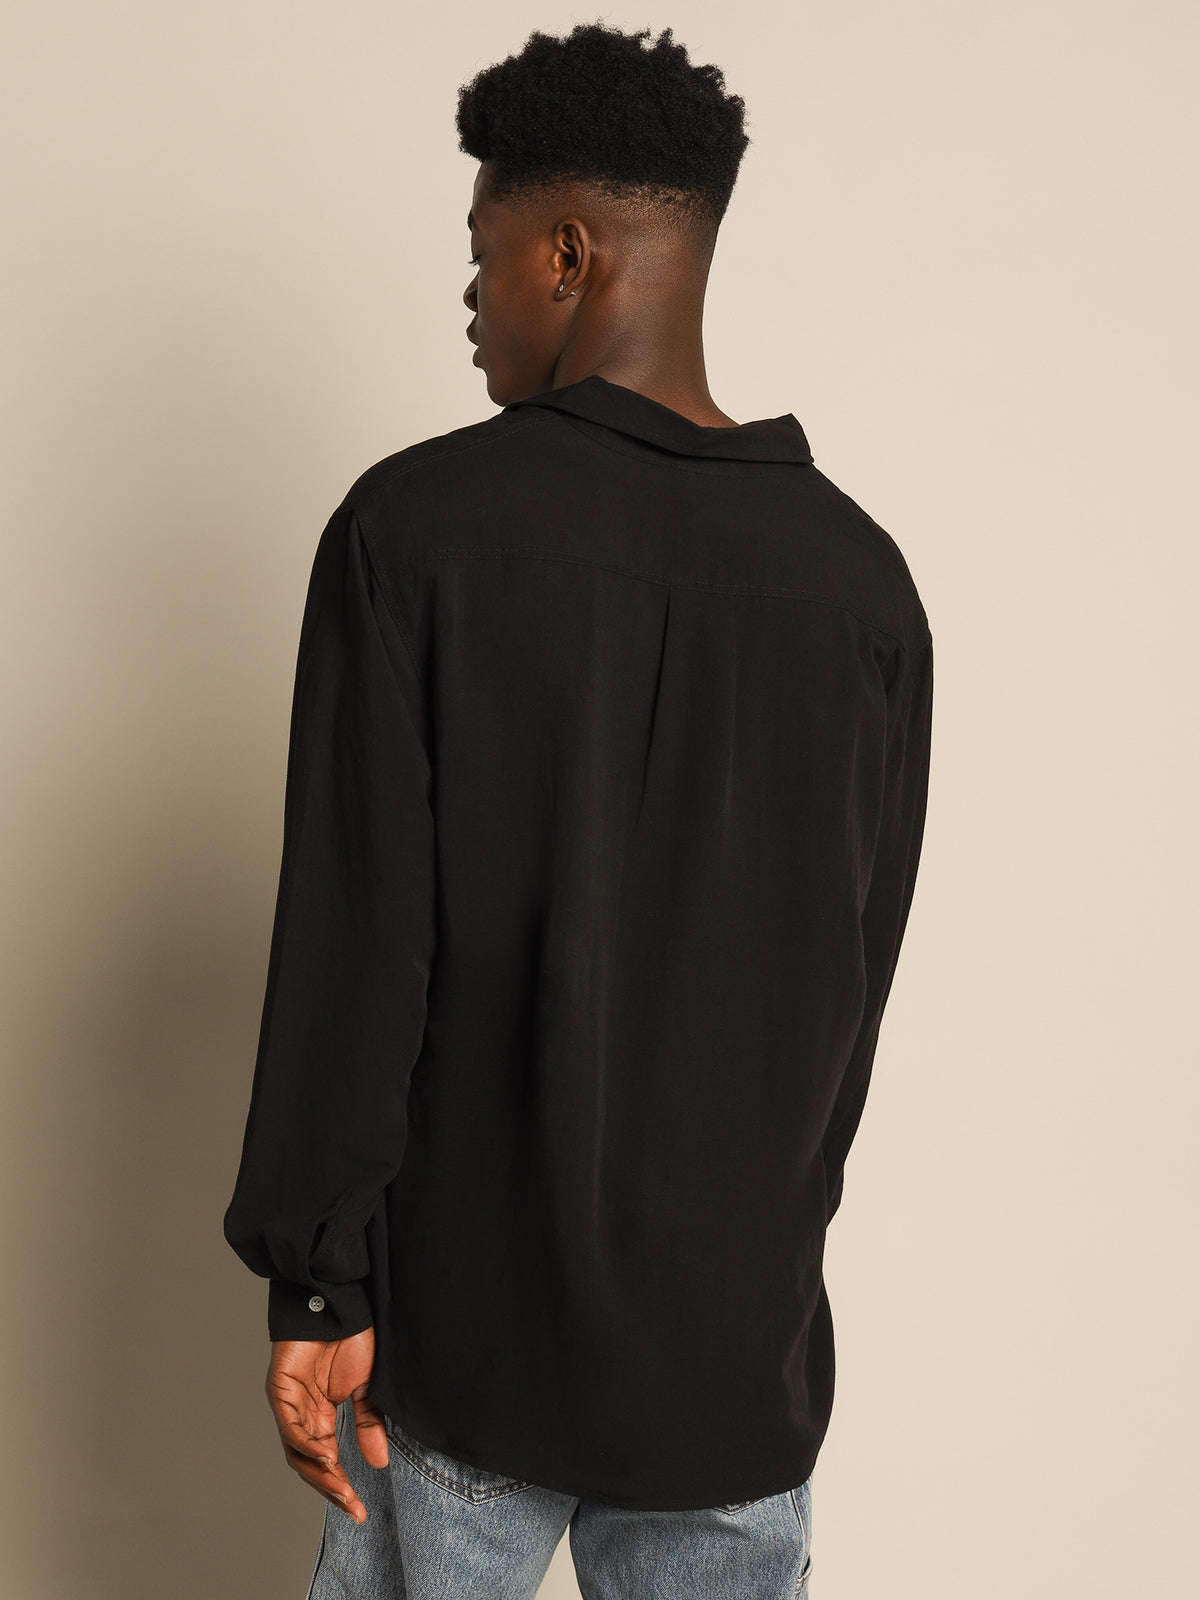 Cherub Long Sleeve Shirt in Black